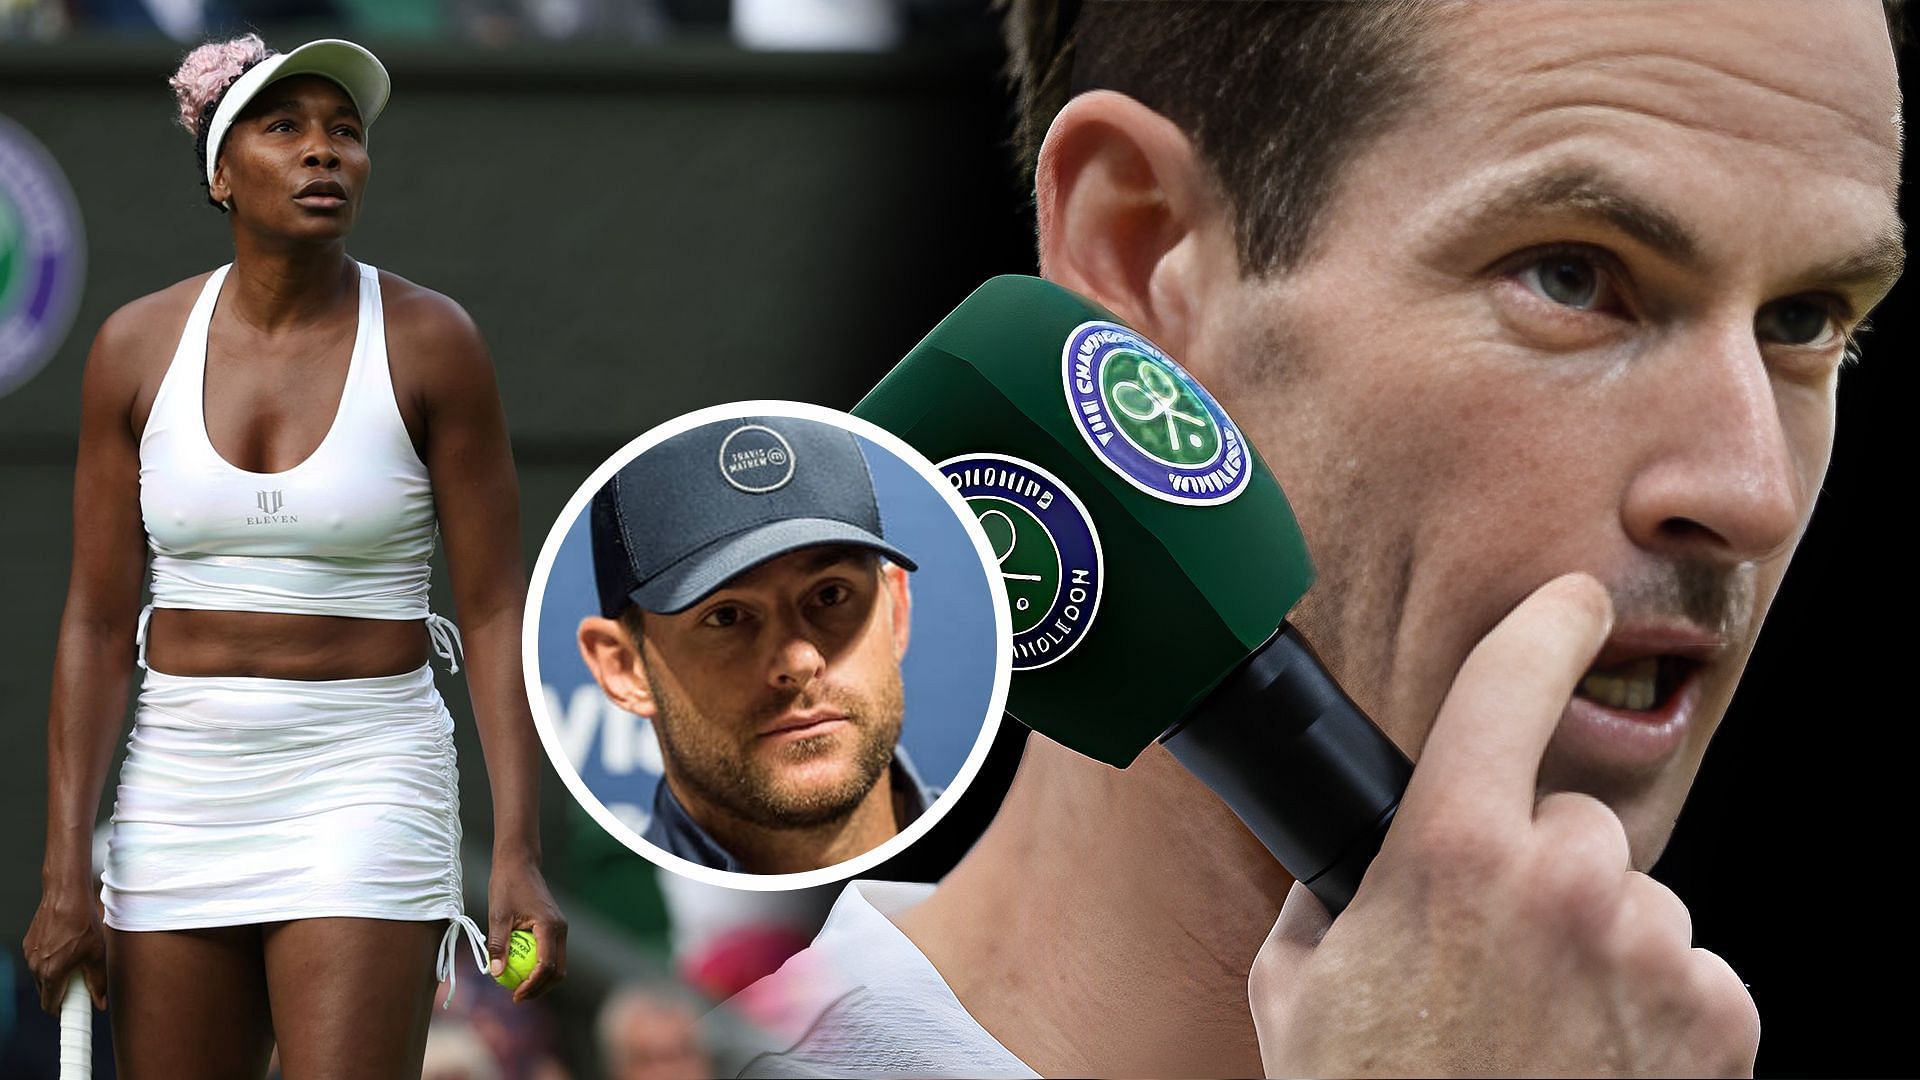 Andy Roddick and journalist Jon Wertheim compared Andy Murray